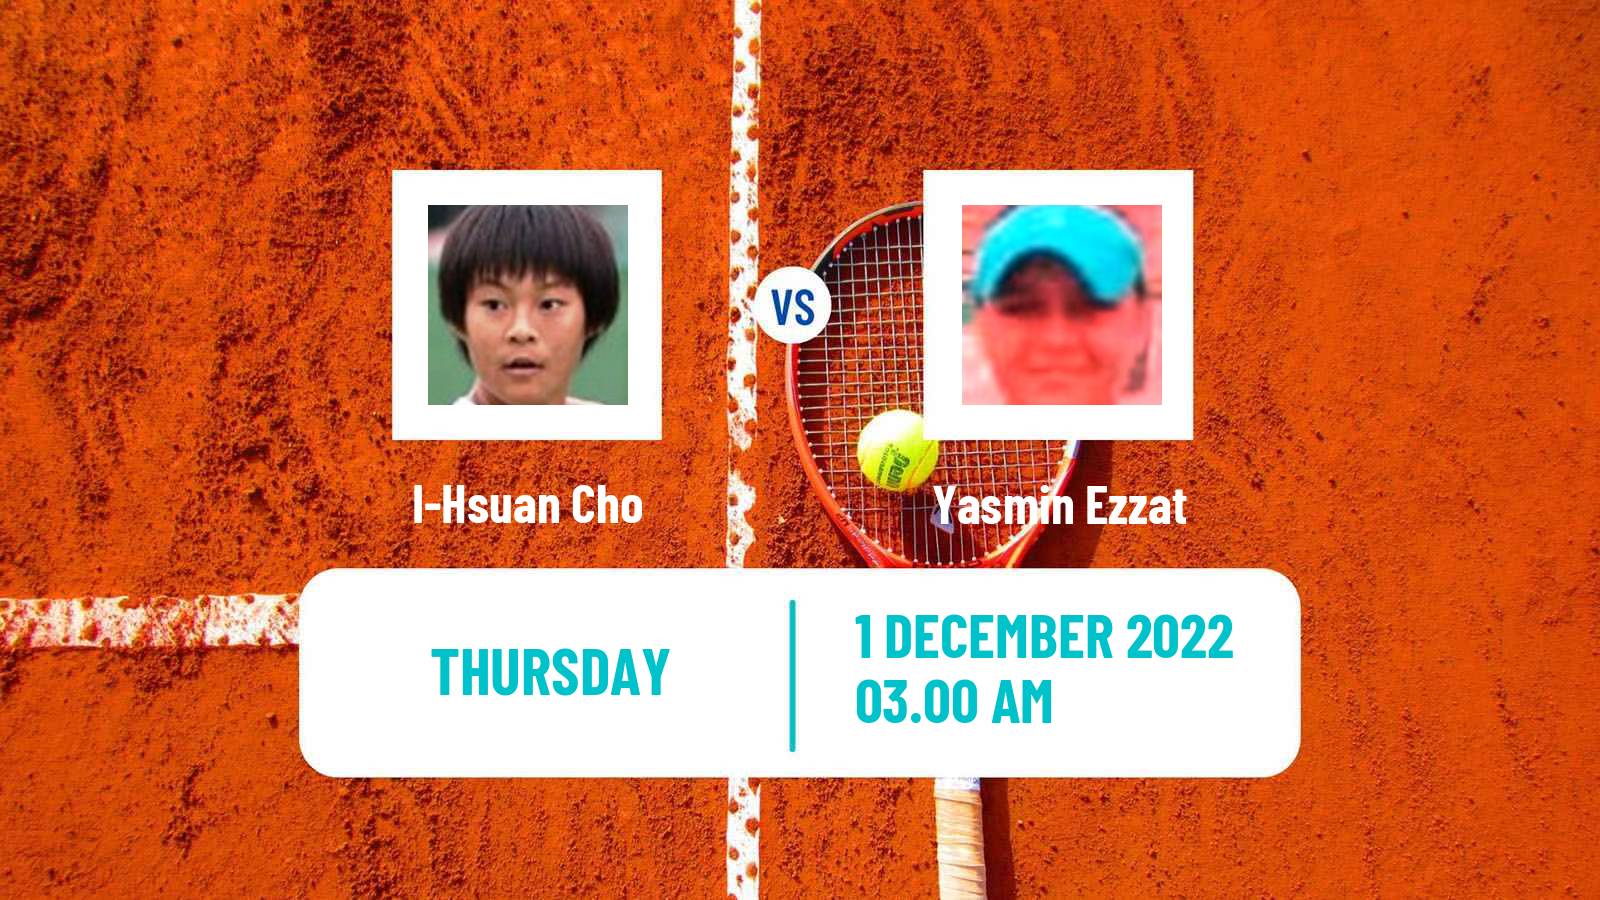 Tennis ITF Tournaments I-Hsuan Cho - Yasmin Ezzat